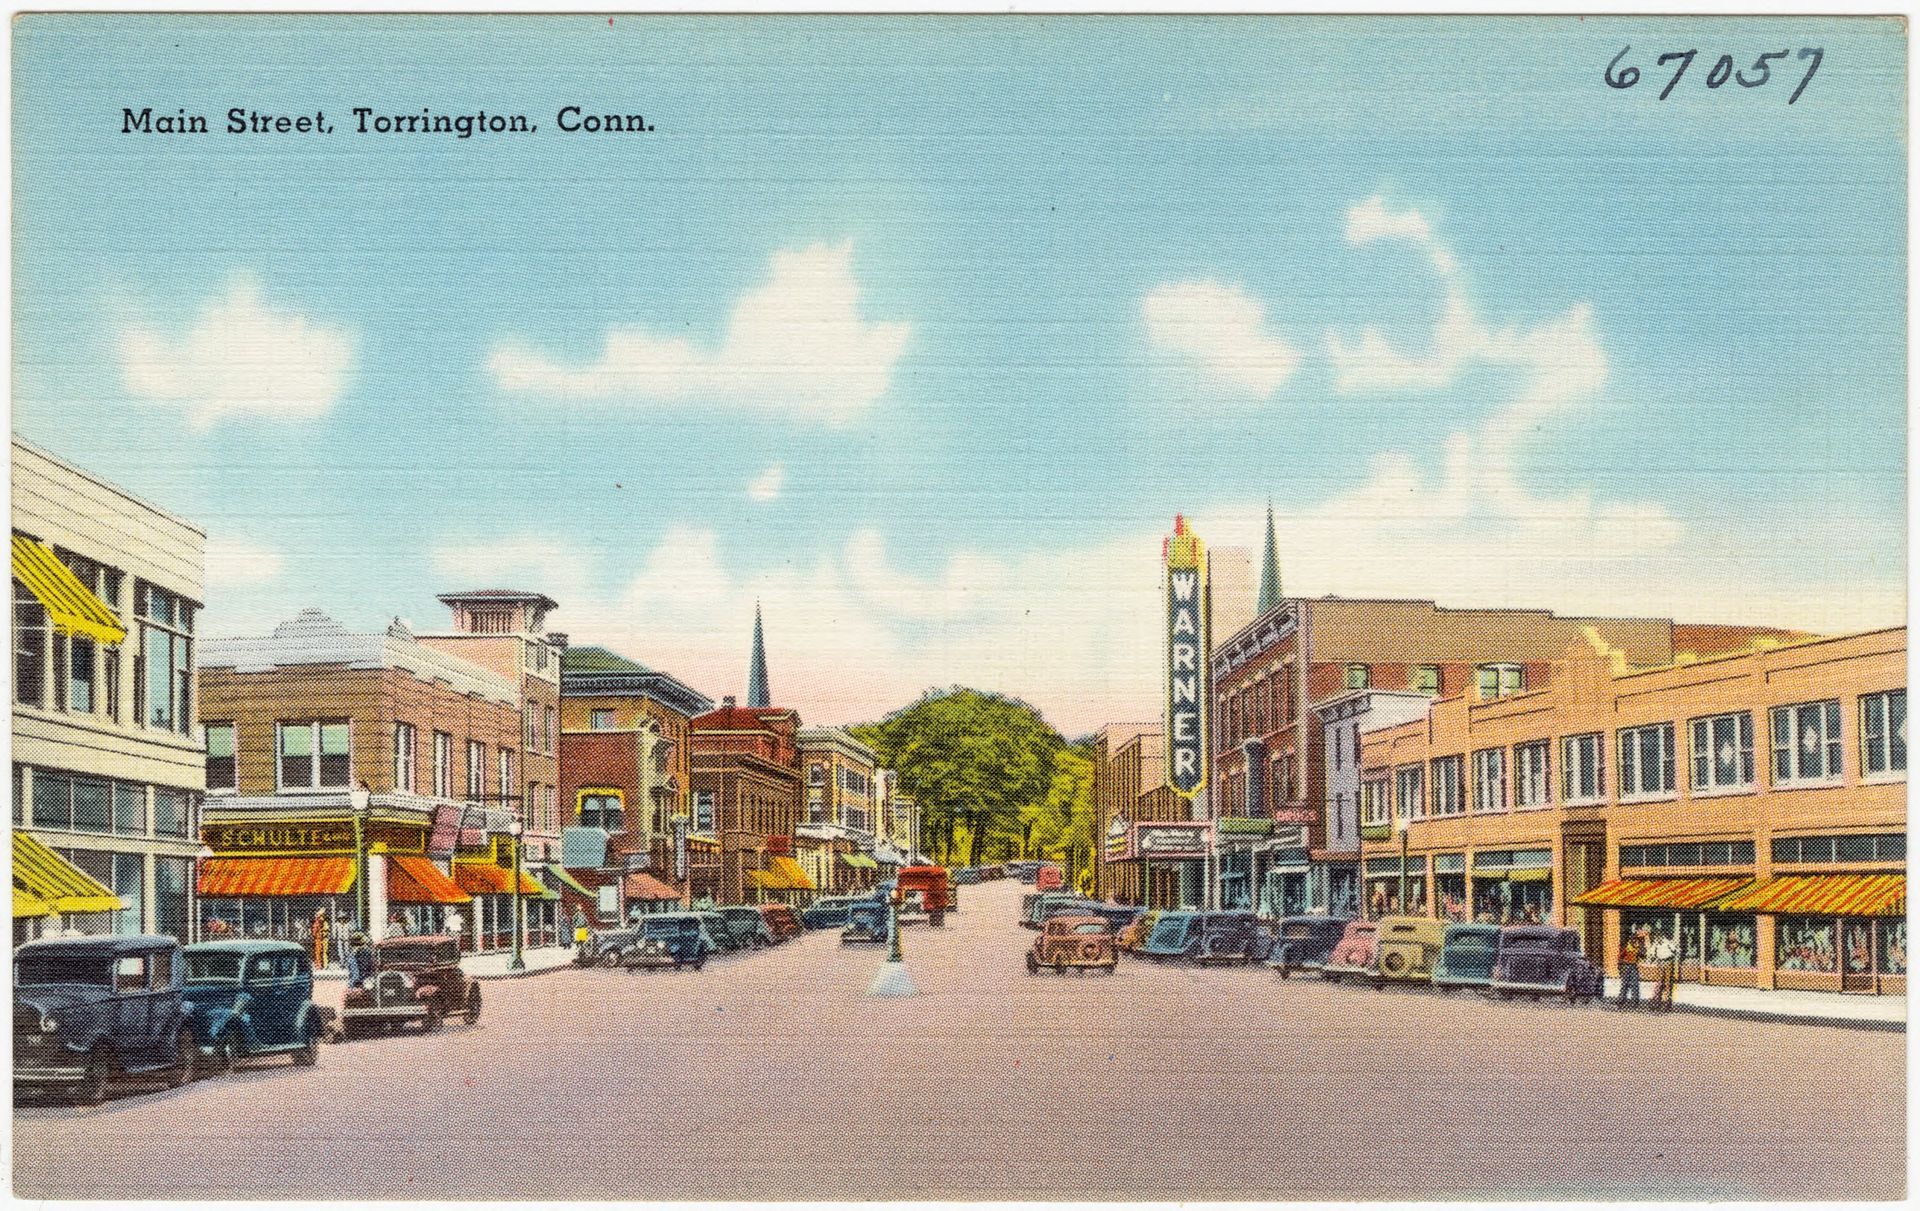 A historic postcard illustration of downtown Torrington, Connecticut.